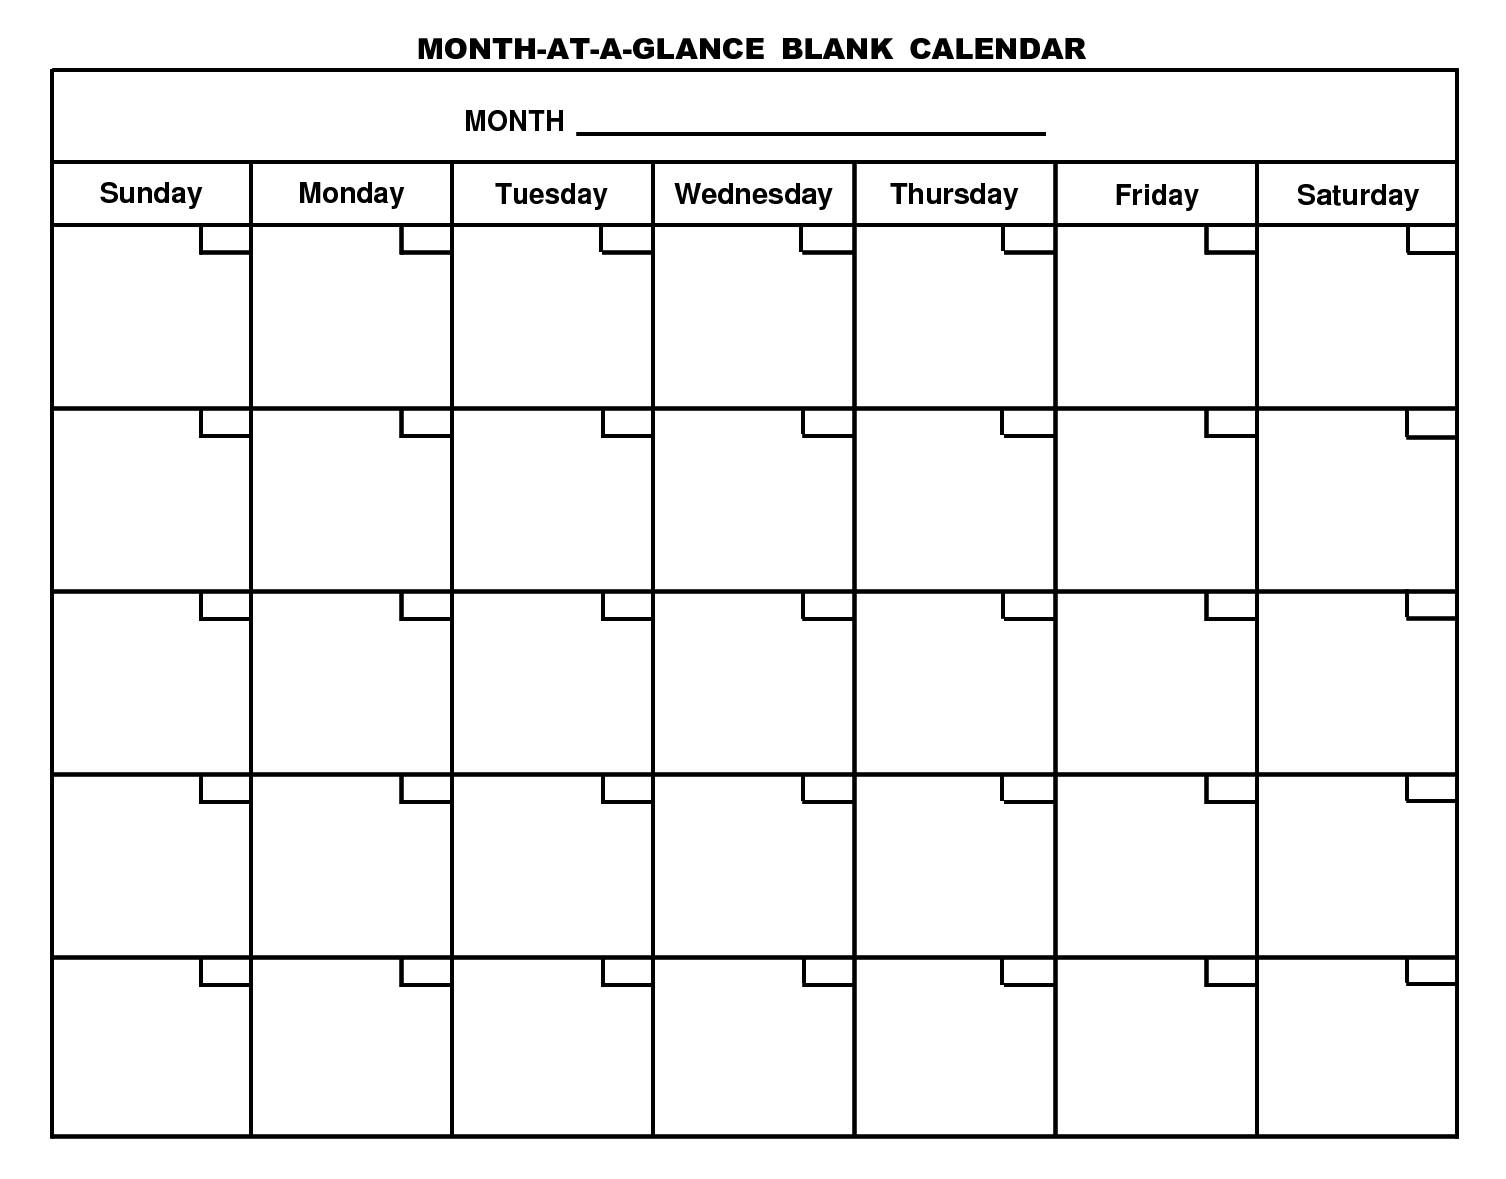 Pinstacy Tangren On Work | Blank Monthly Calendar